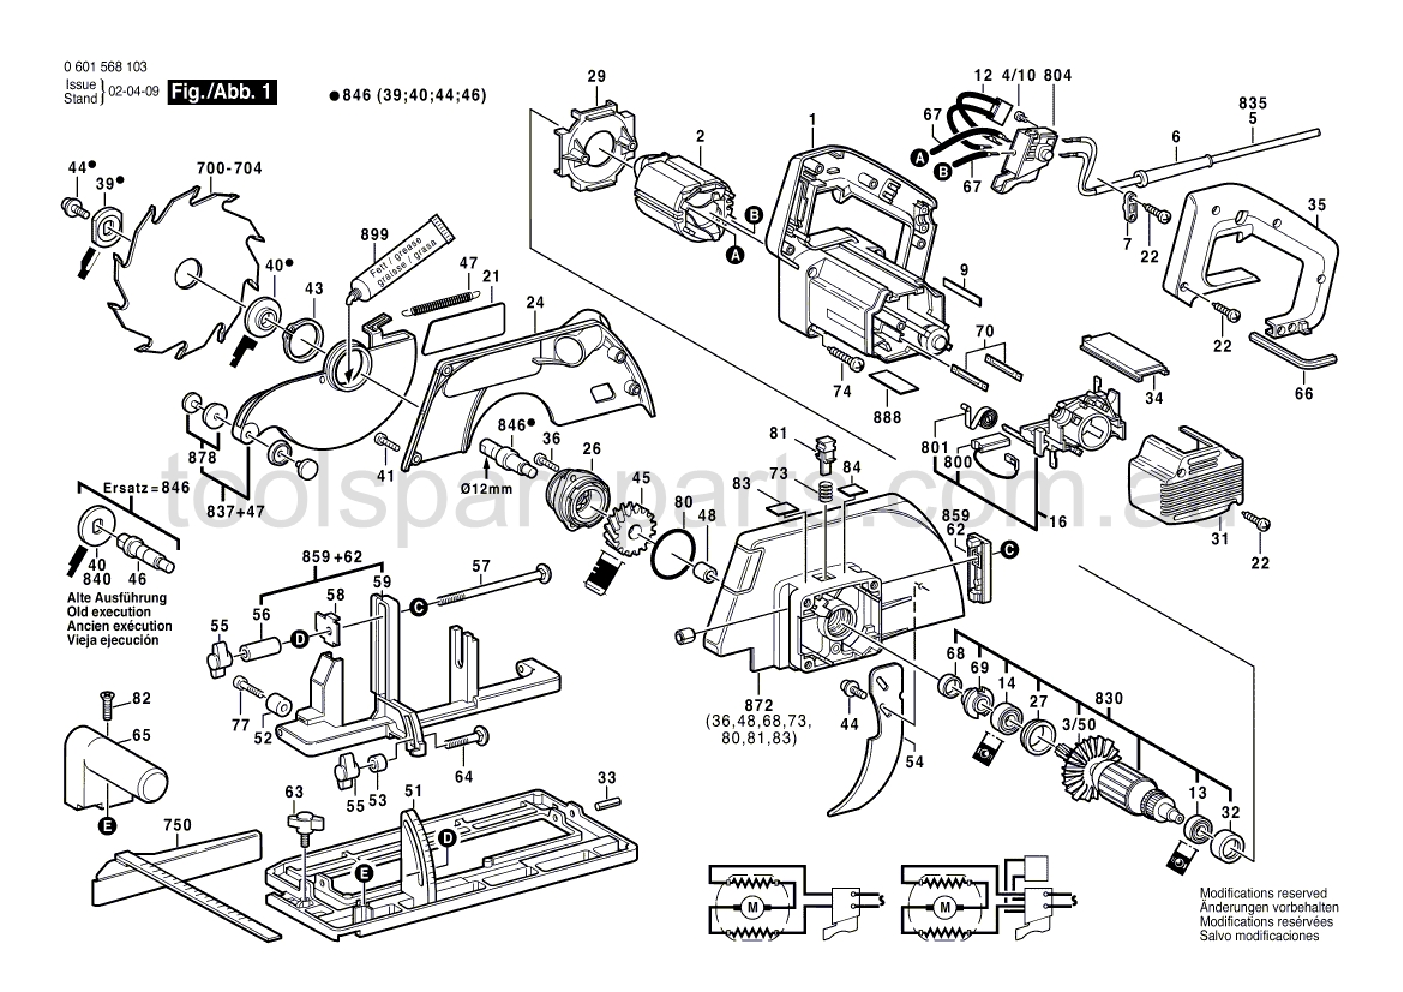 Bosch GKS 65 0601568137  Diagram 1